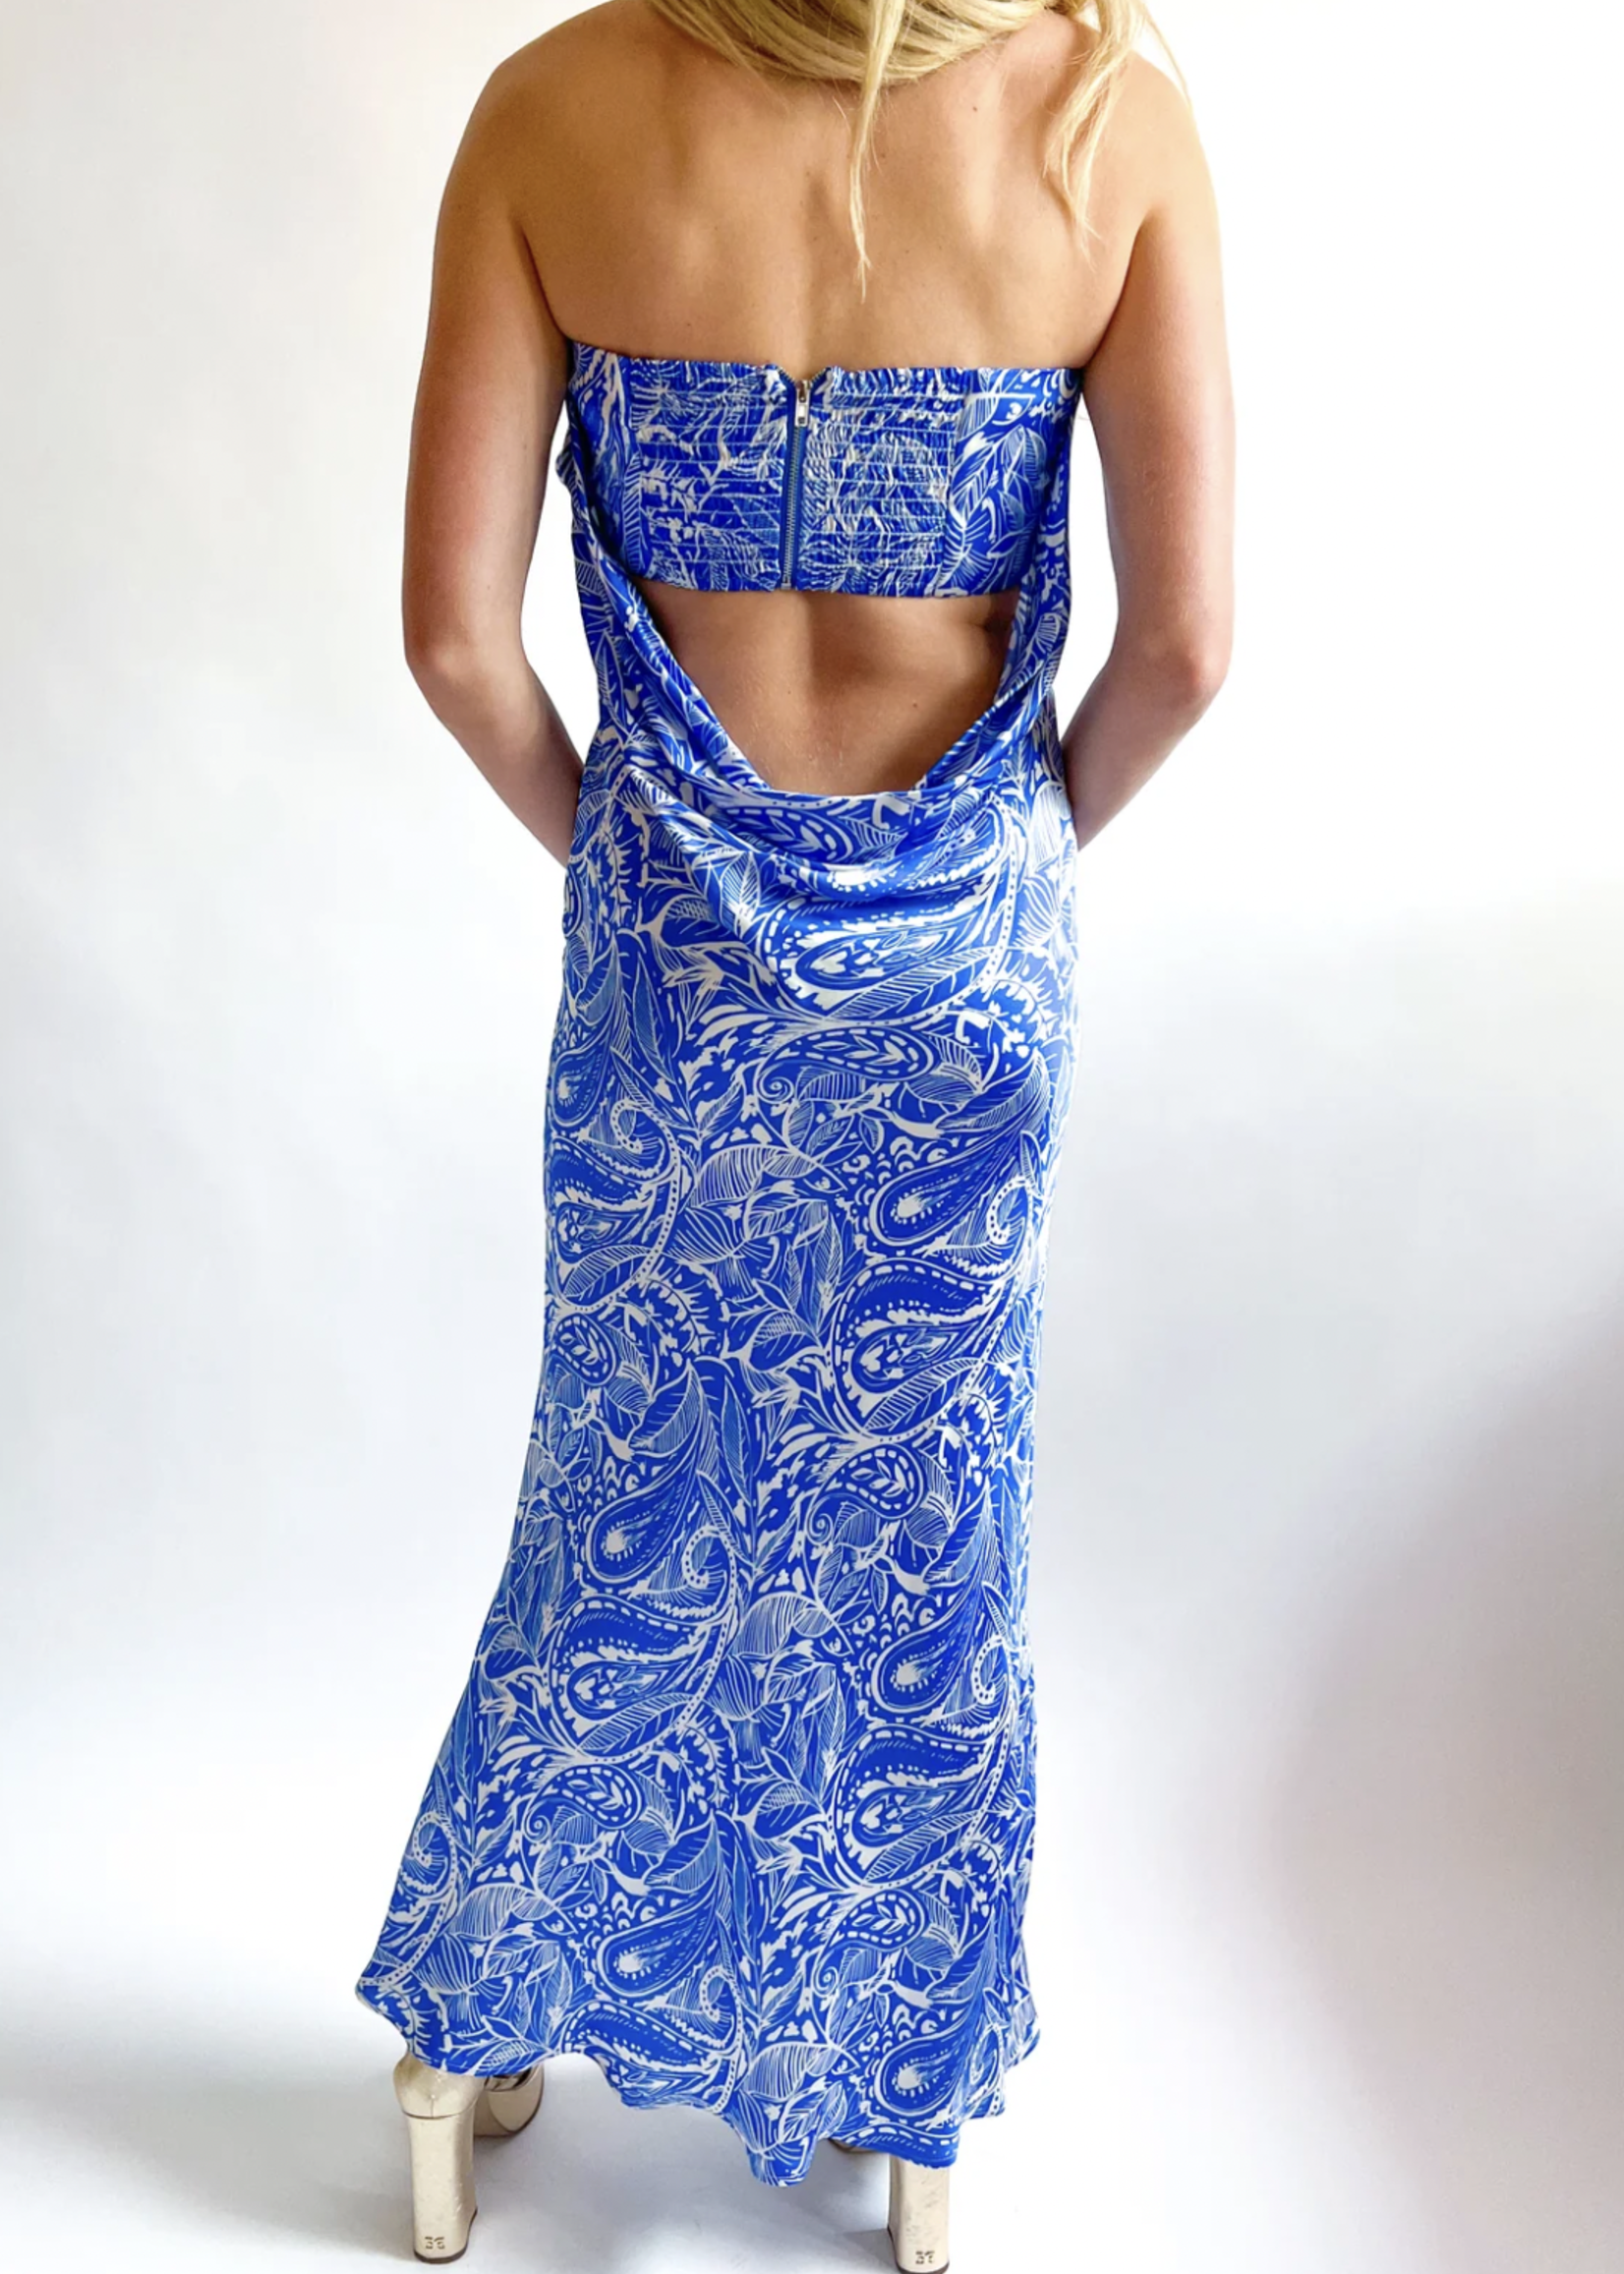 Elitaire Boutique Talia Maxi Dress in Blue